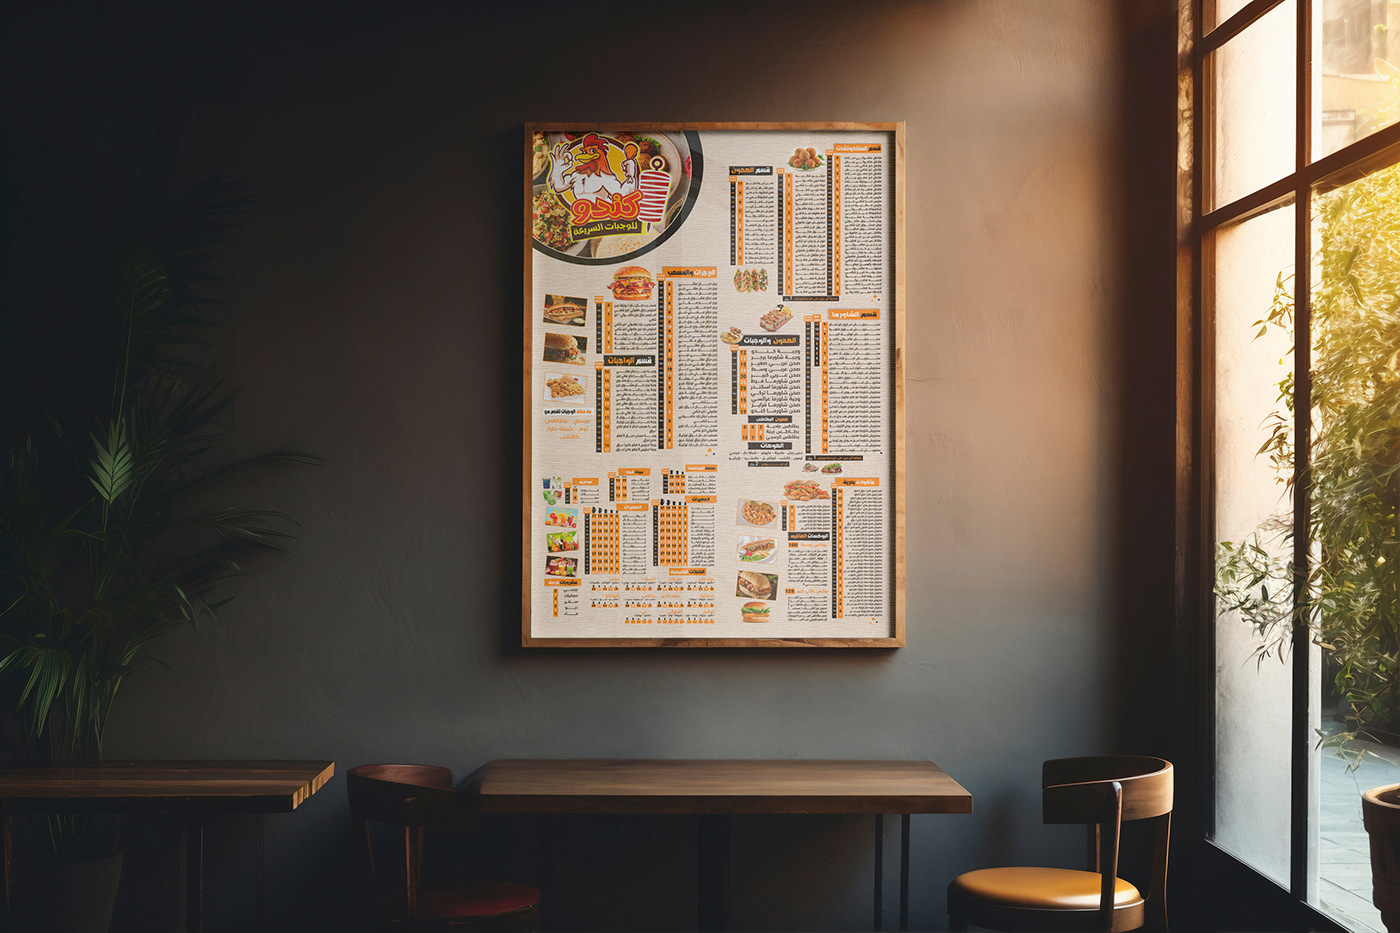 menu هویت بصری رمضان كريم حسنى   menu design restaurant